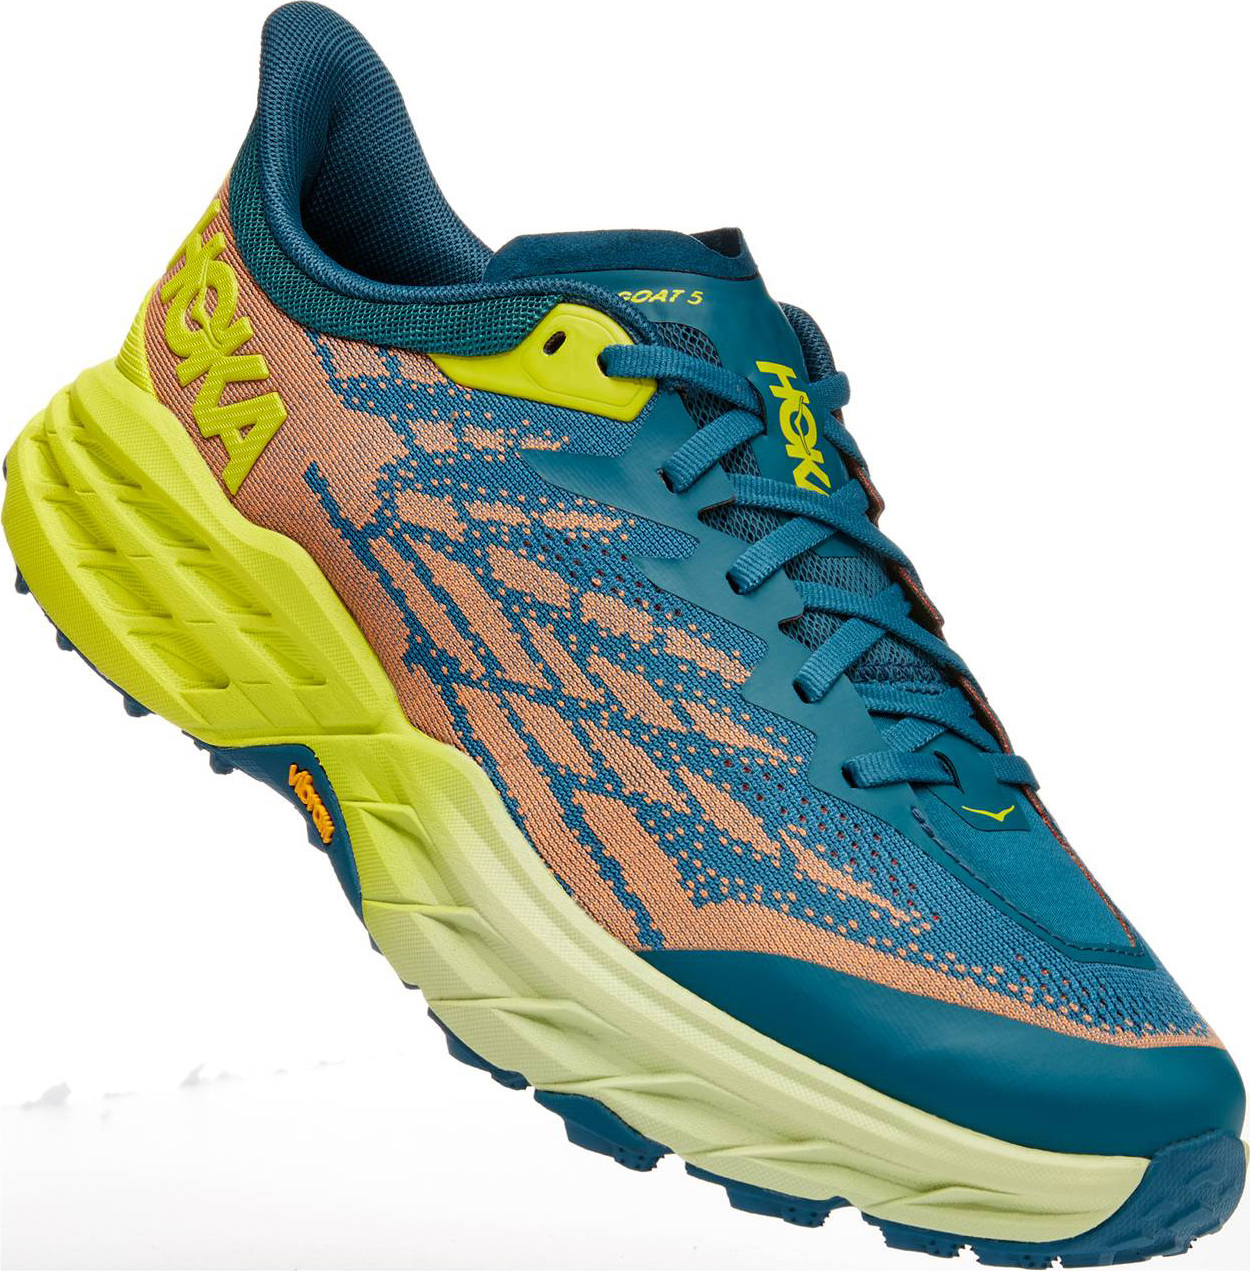 Hoka Speedgoat 5 Shoes - Men's, Fiesta / Radiant Yellow, 12EE,  1123159-FRYL-12EE — Mens Shoe Size: 12 US, Mens Shoe Width: Wide, Color:  Fiesta/Radiant